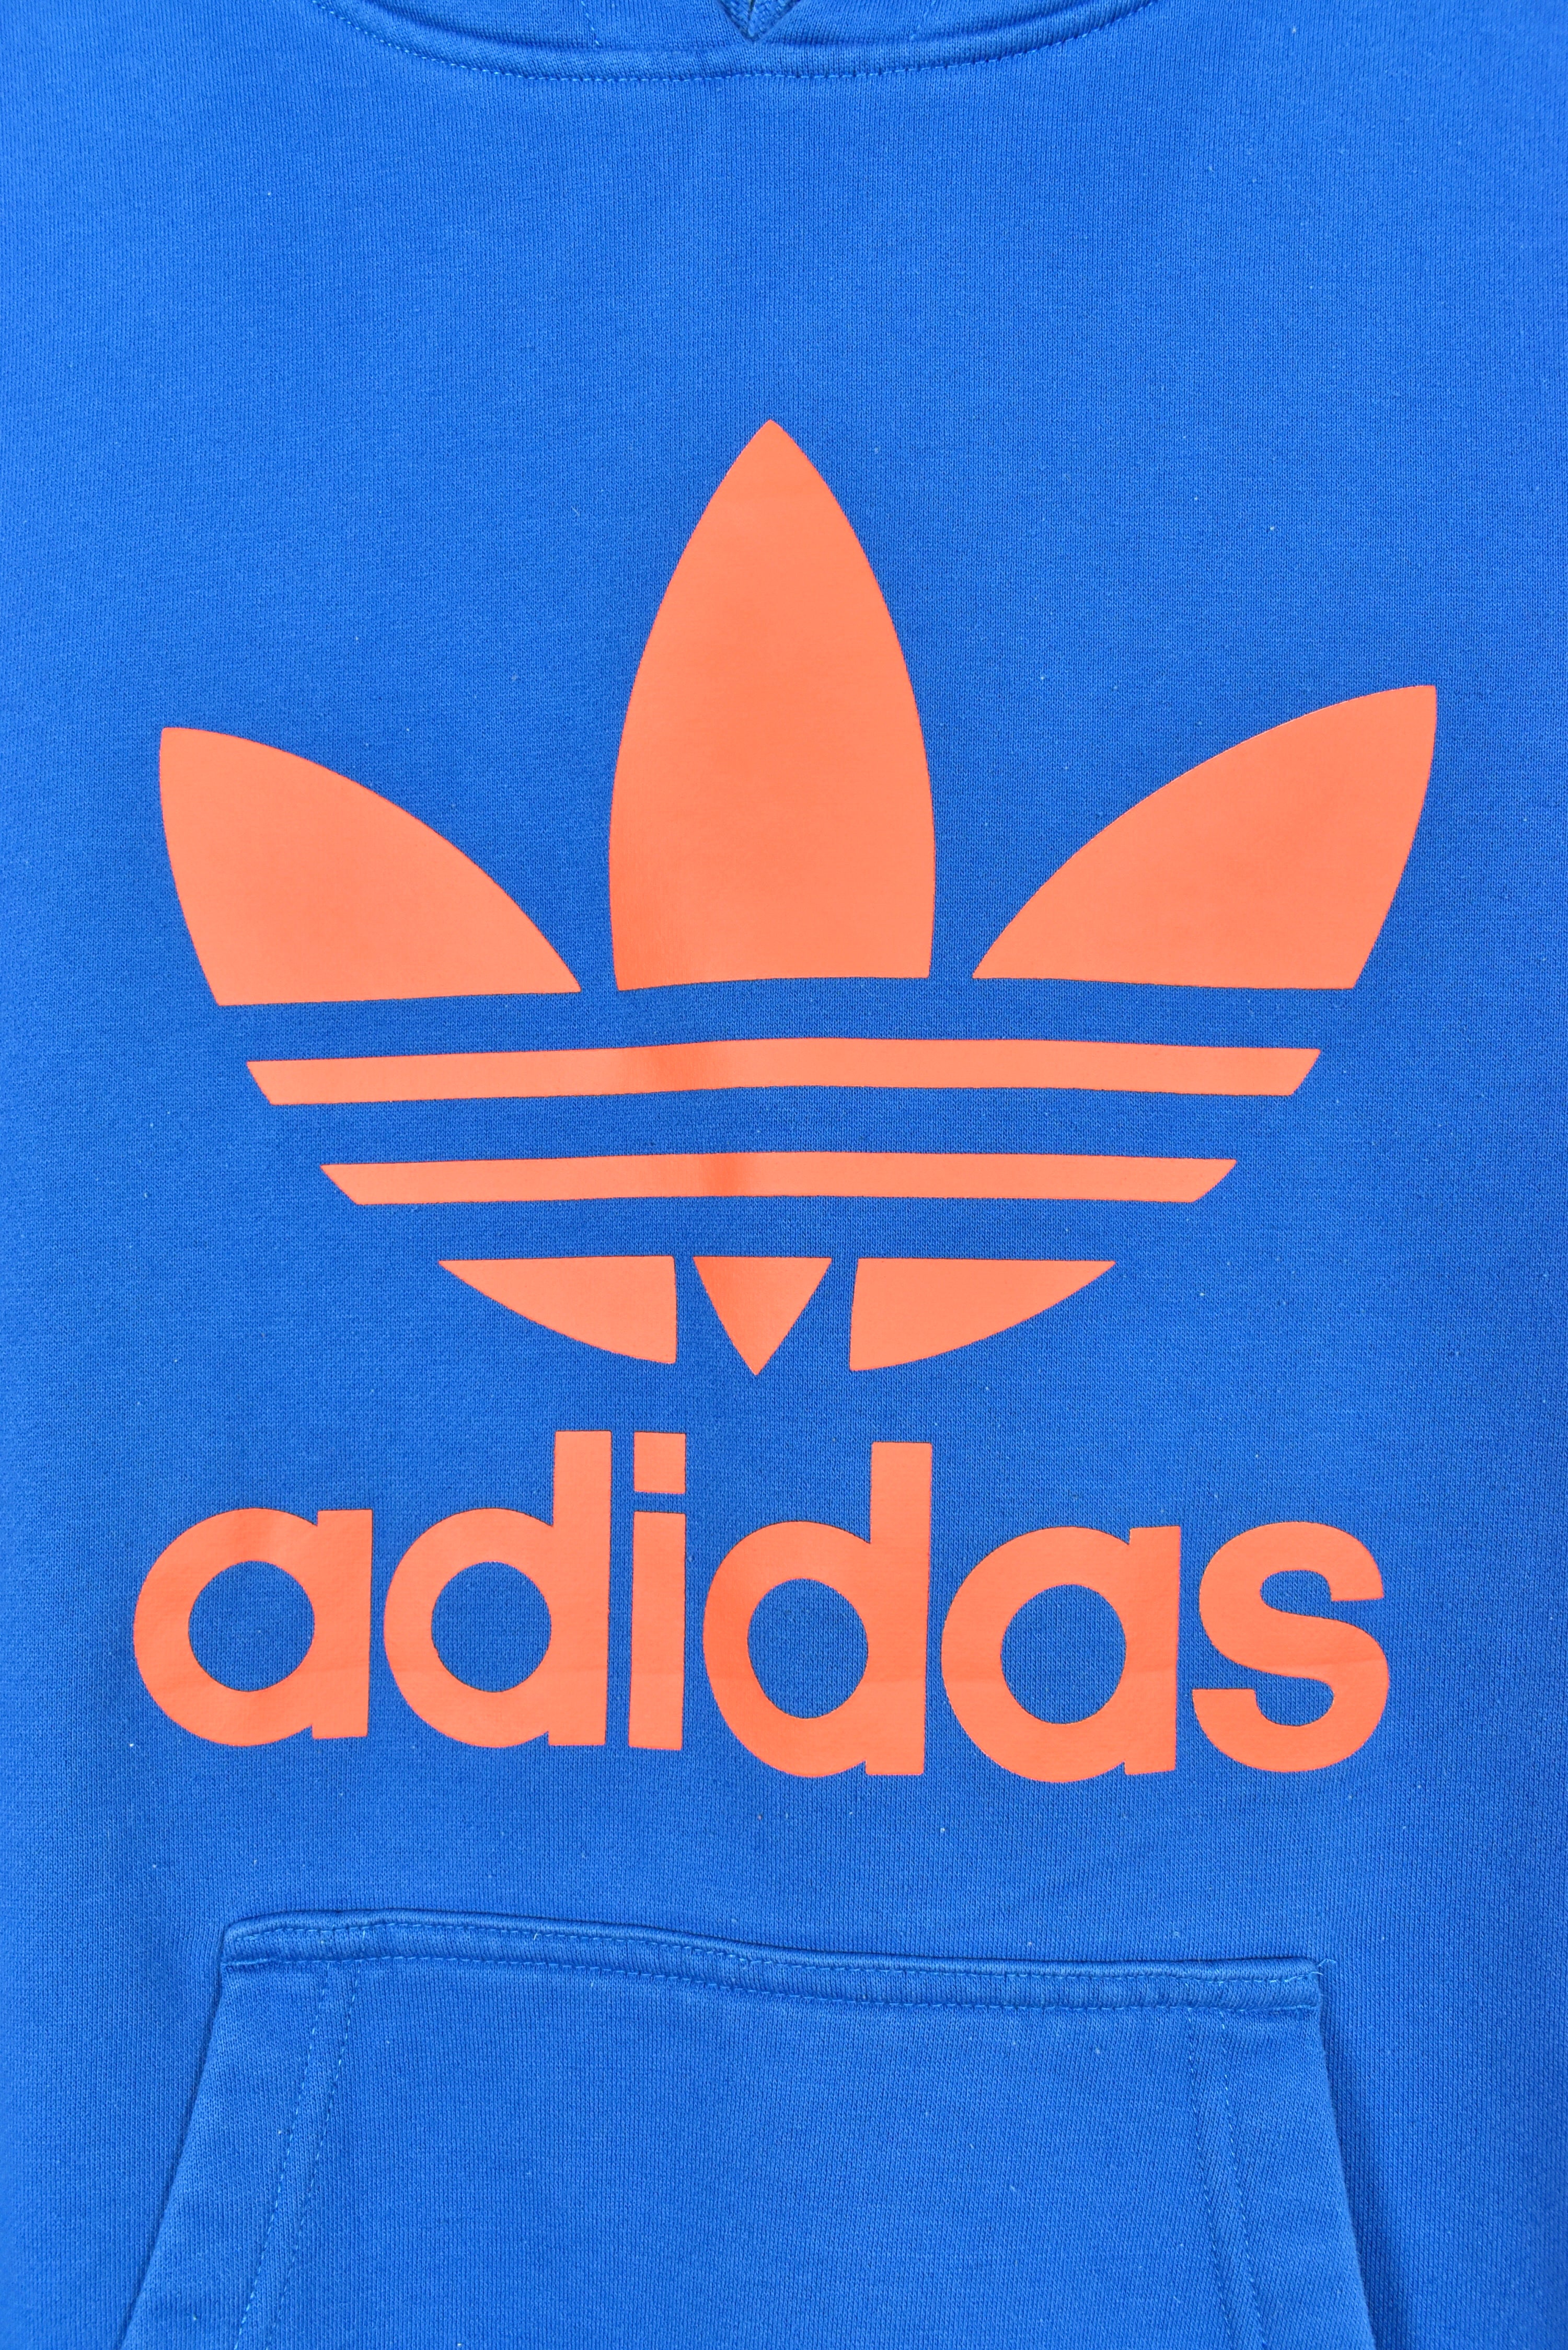 Modern Adidas hoodie, blue graphic sweatshirt - AU Large ADIDAS